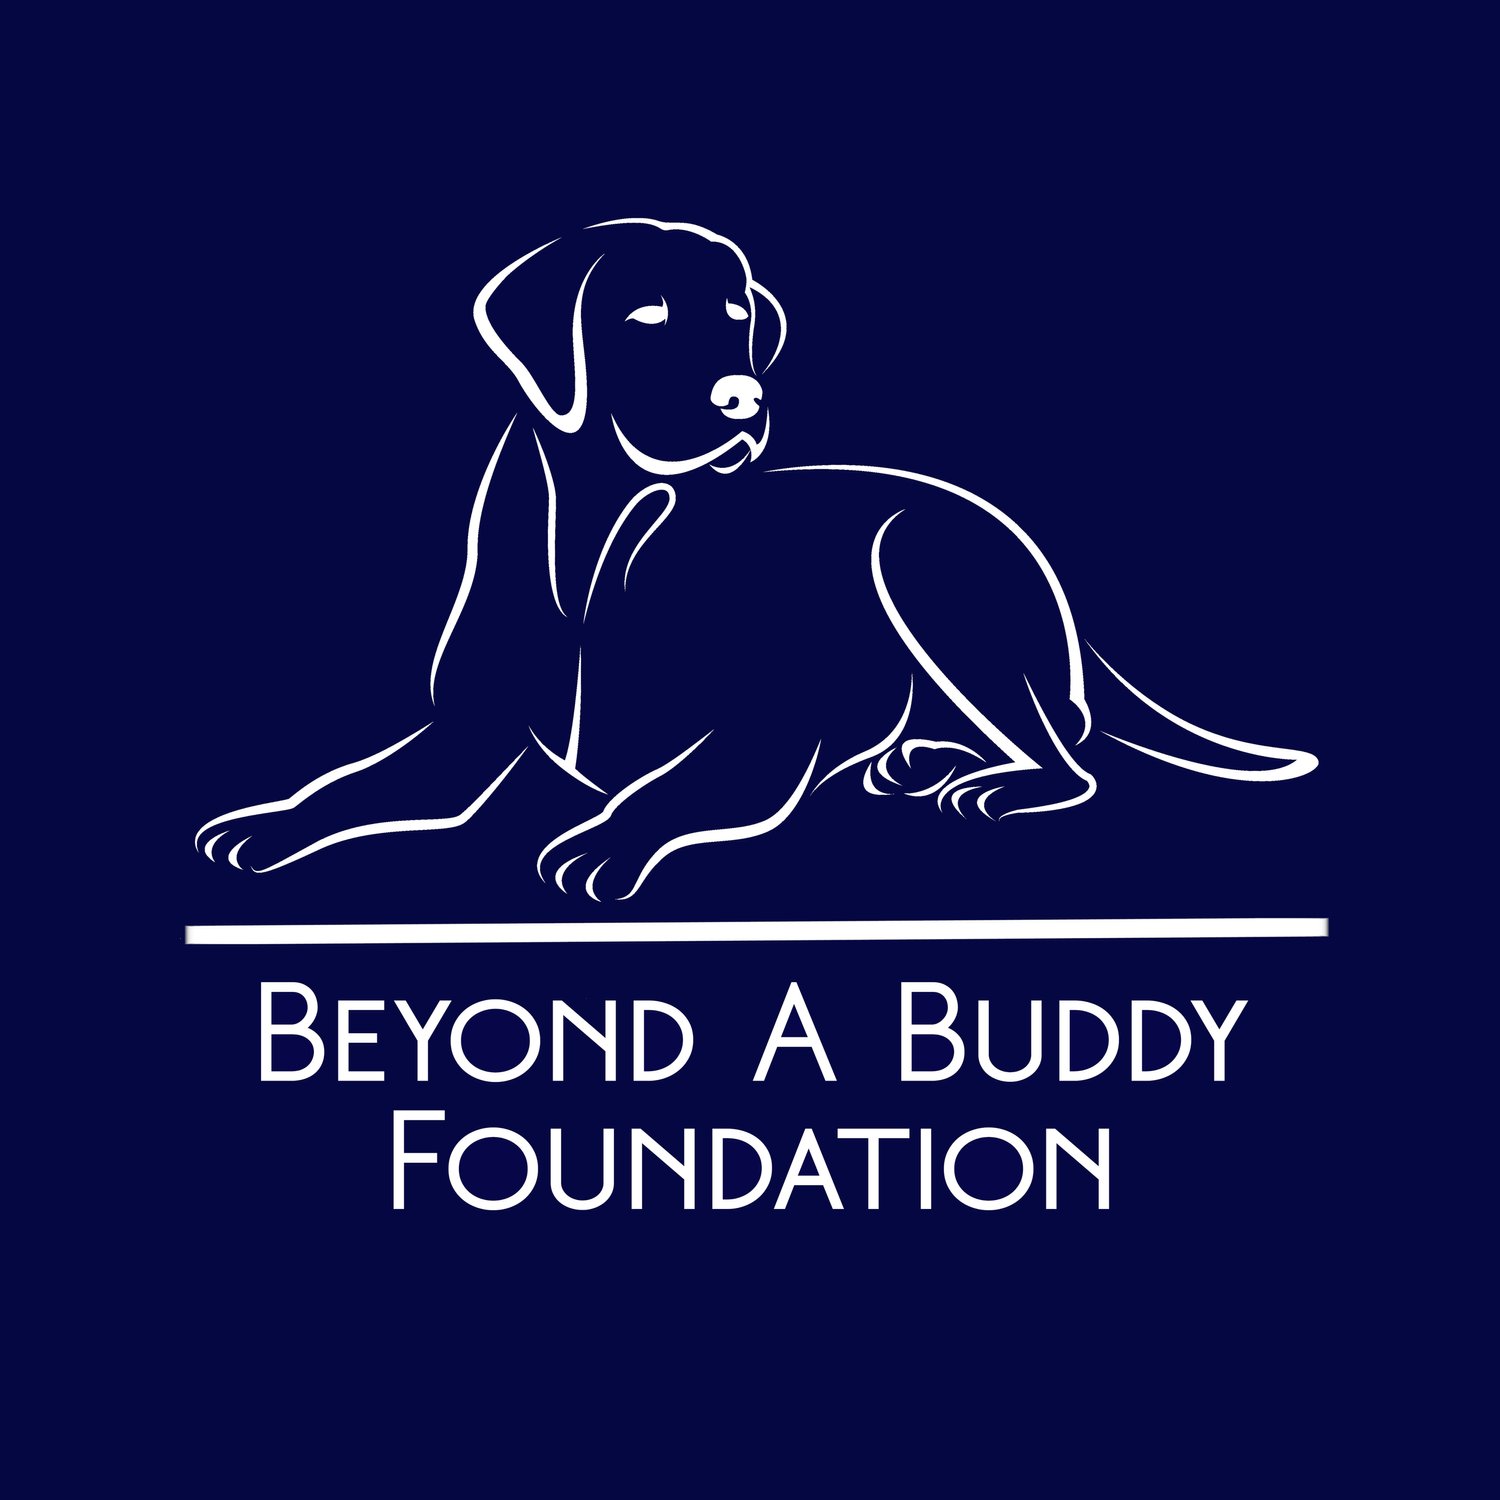 Beyond a Buddy Foundation